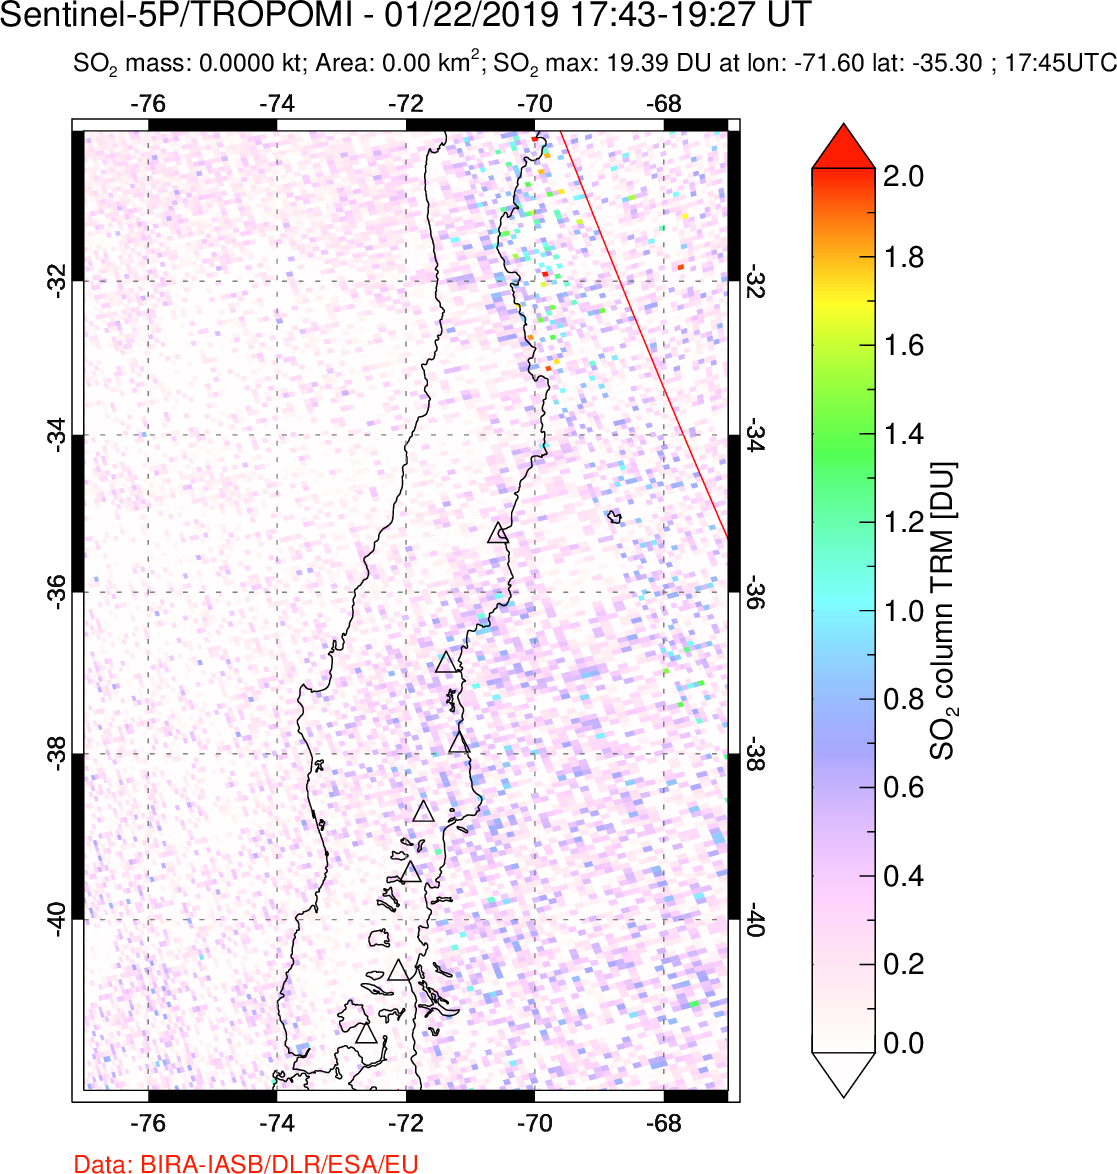 A sulfur dioxide image over Central Chile on Jan 22, 2019.